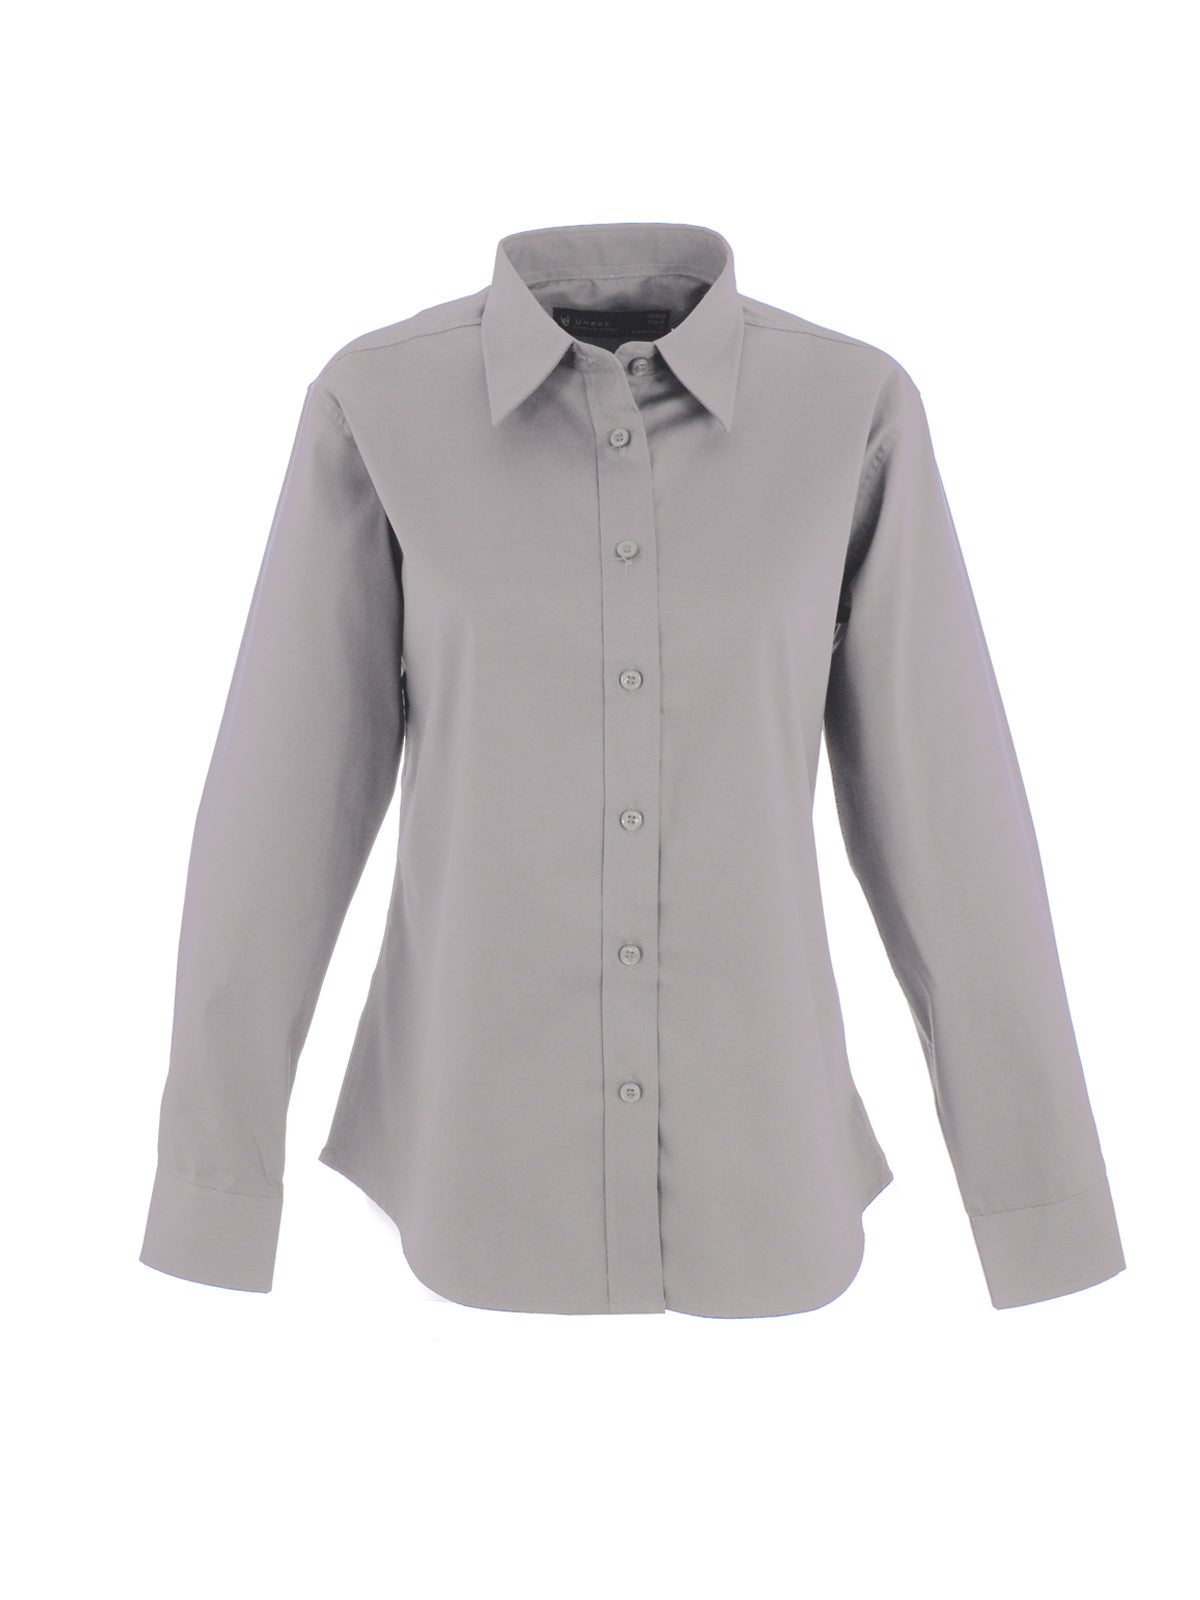 Uneek Ladies Pinpoint Oxford Full Sleeve Shirt UC703 - Silver Grey